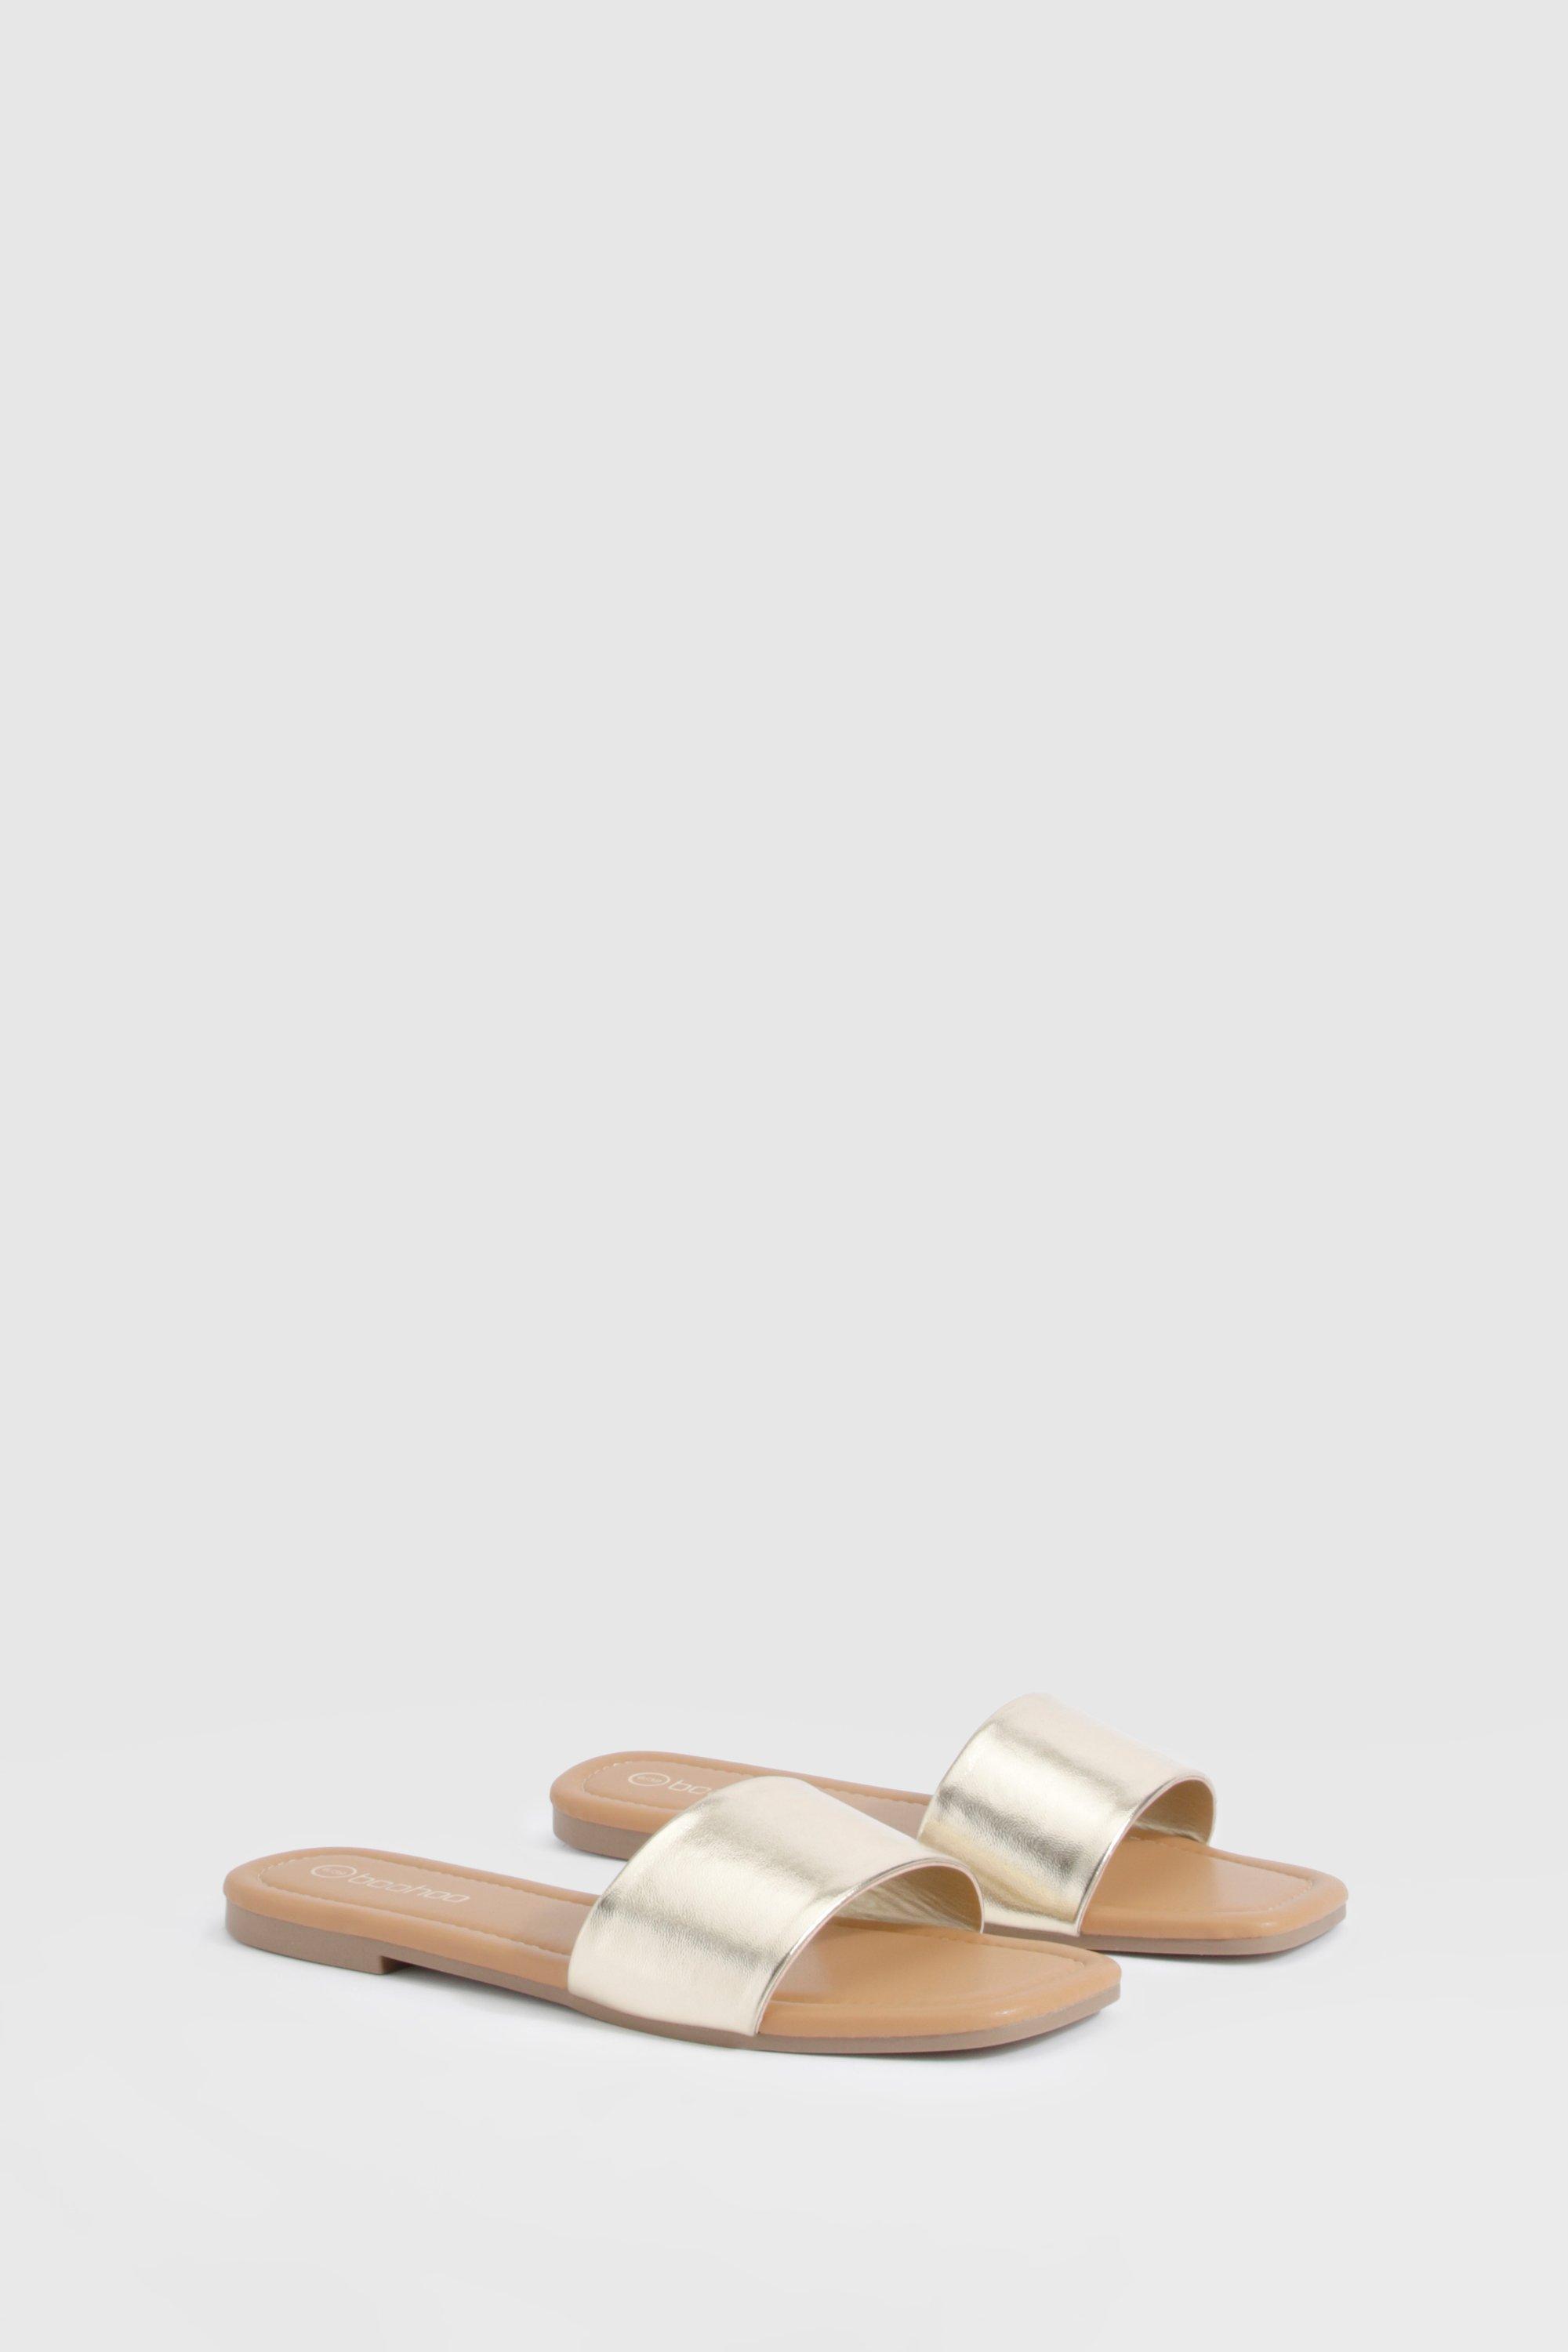 Image of Metallic Minimal Mule Sandals, Metallics